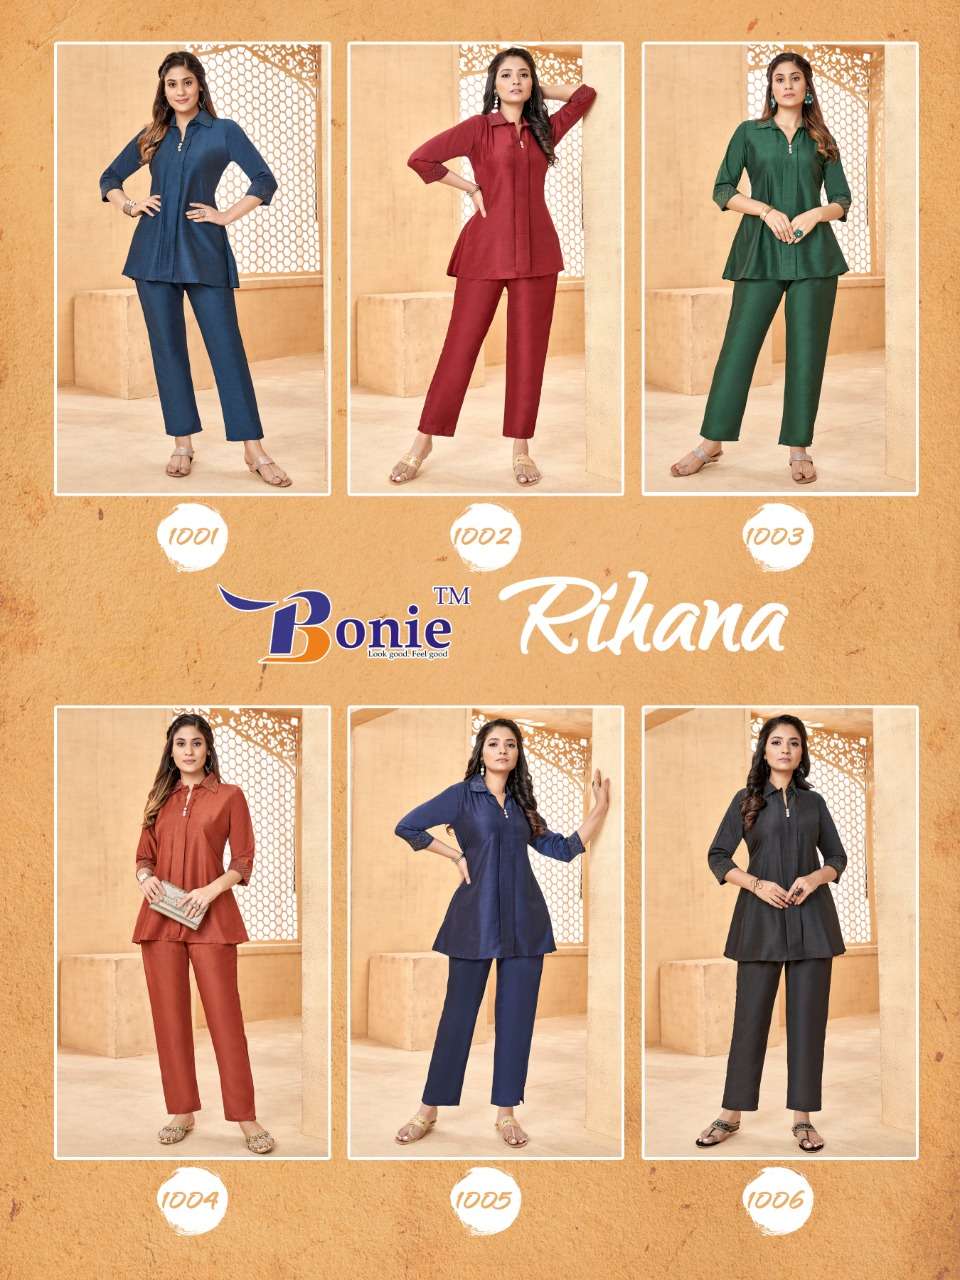 bonie rihana 1001-1006 series fancy designer kurtis catalogue manufacturer surat 